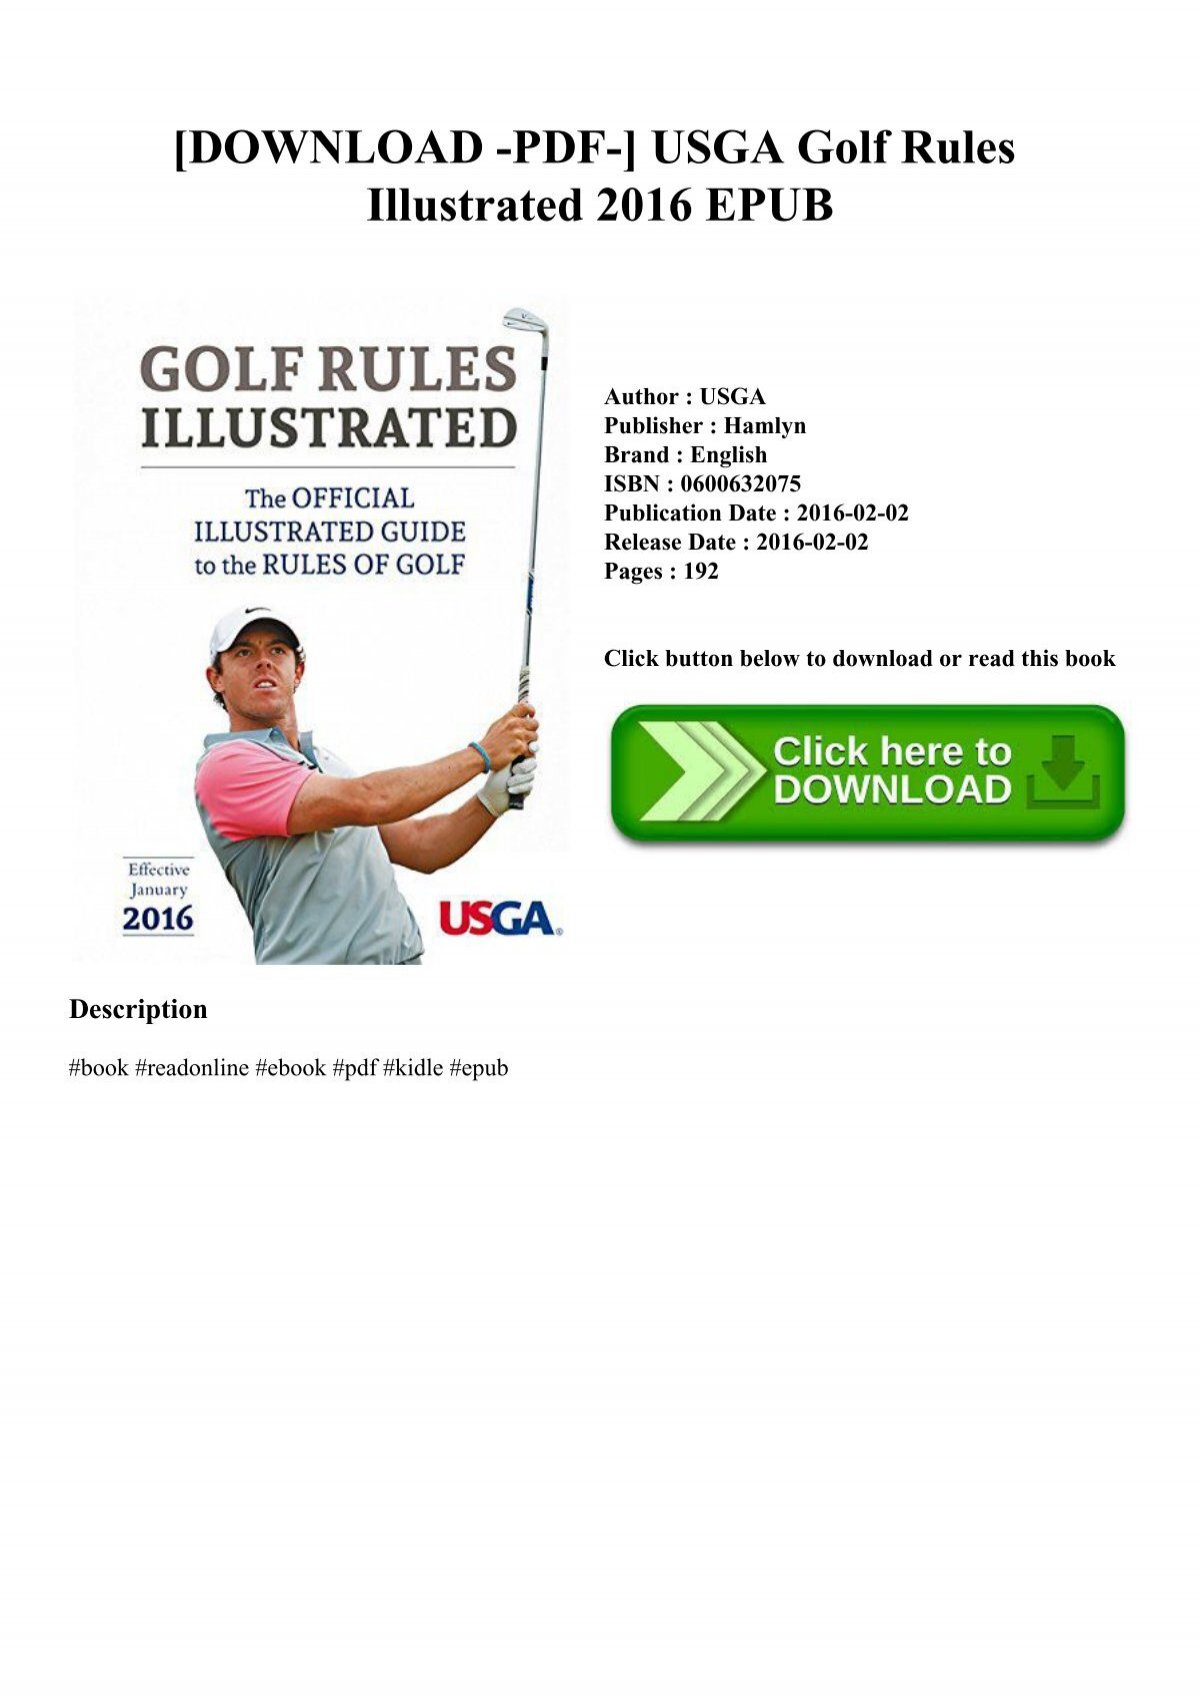 DOWNLOAD -PDF-] USGA Golf Rules Illustrated 2016 EPUB